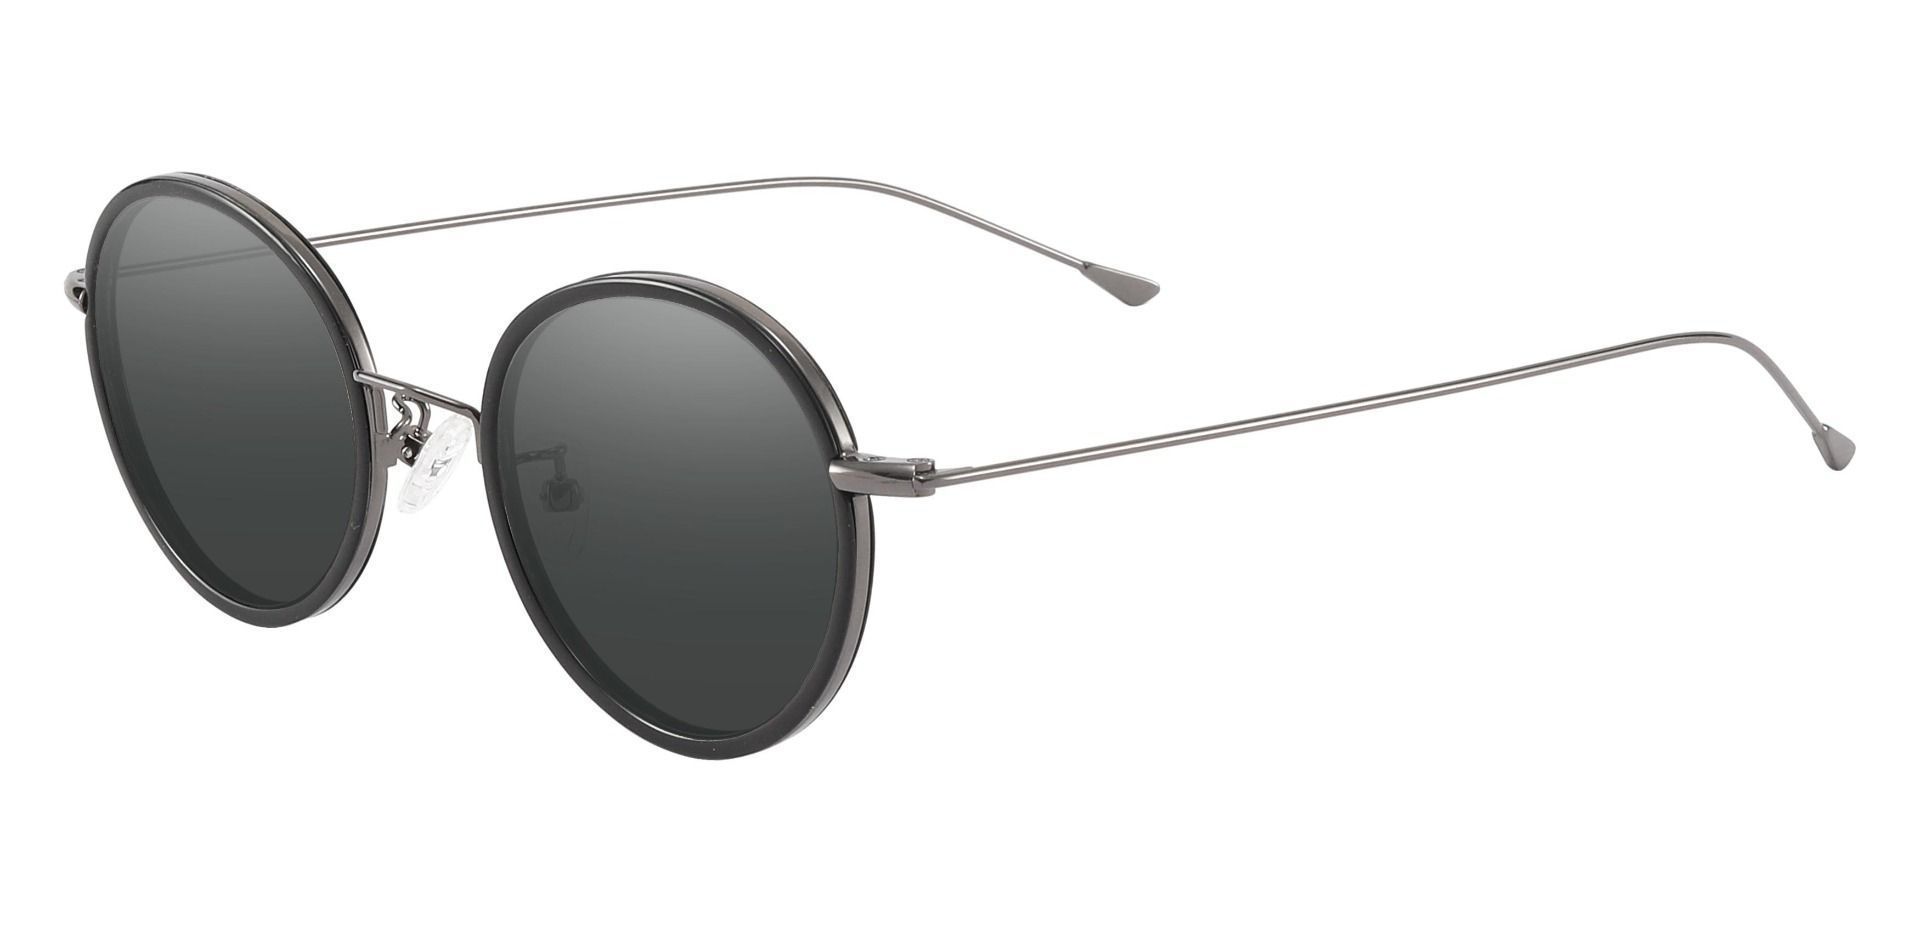 Malverne Oval Lined Bifocal Sunglasses - Black Frame With Gray Lenses